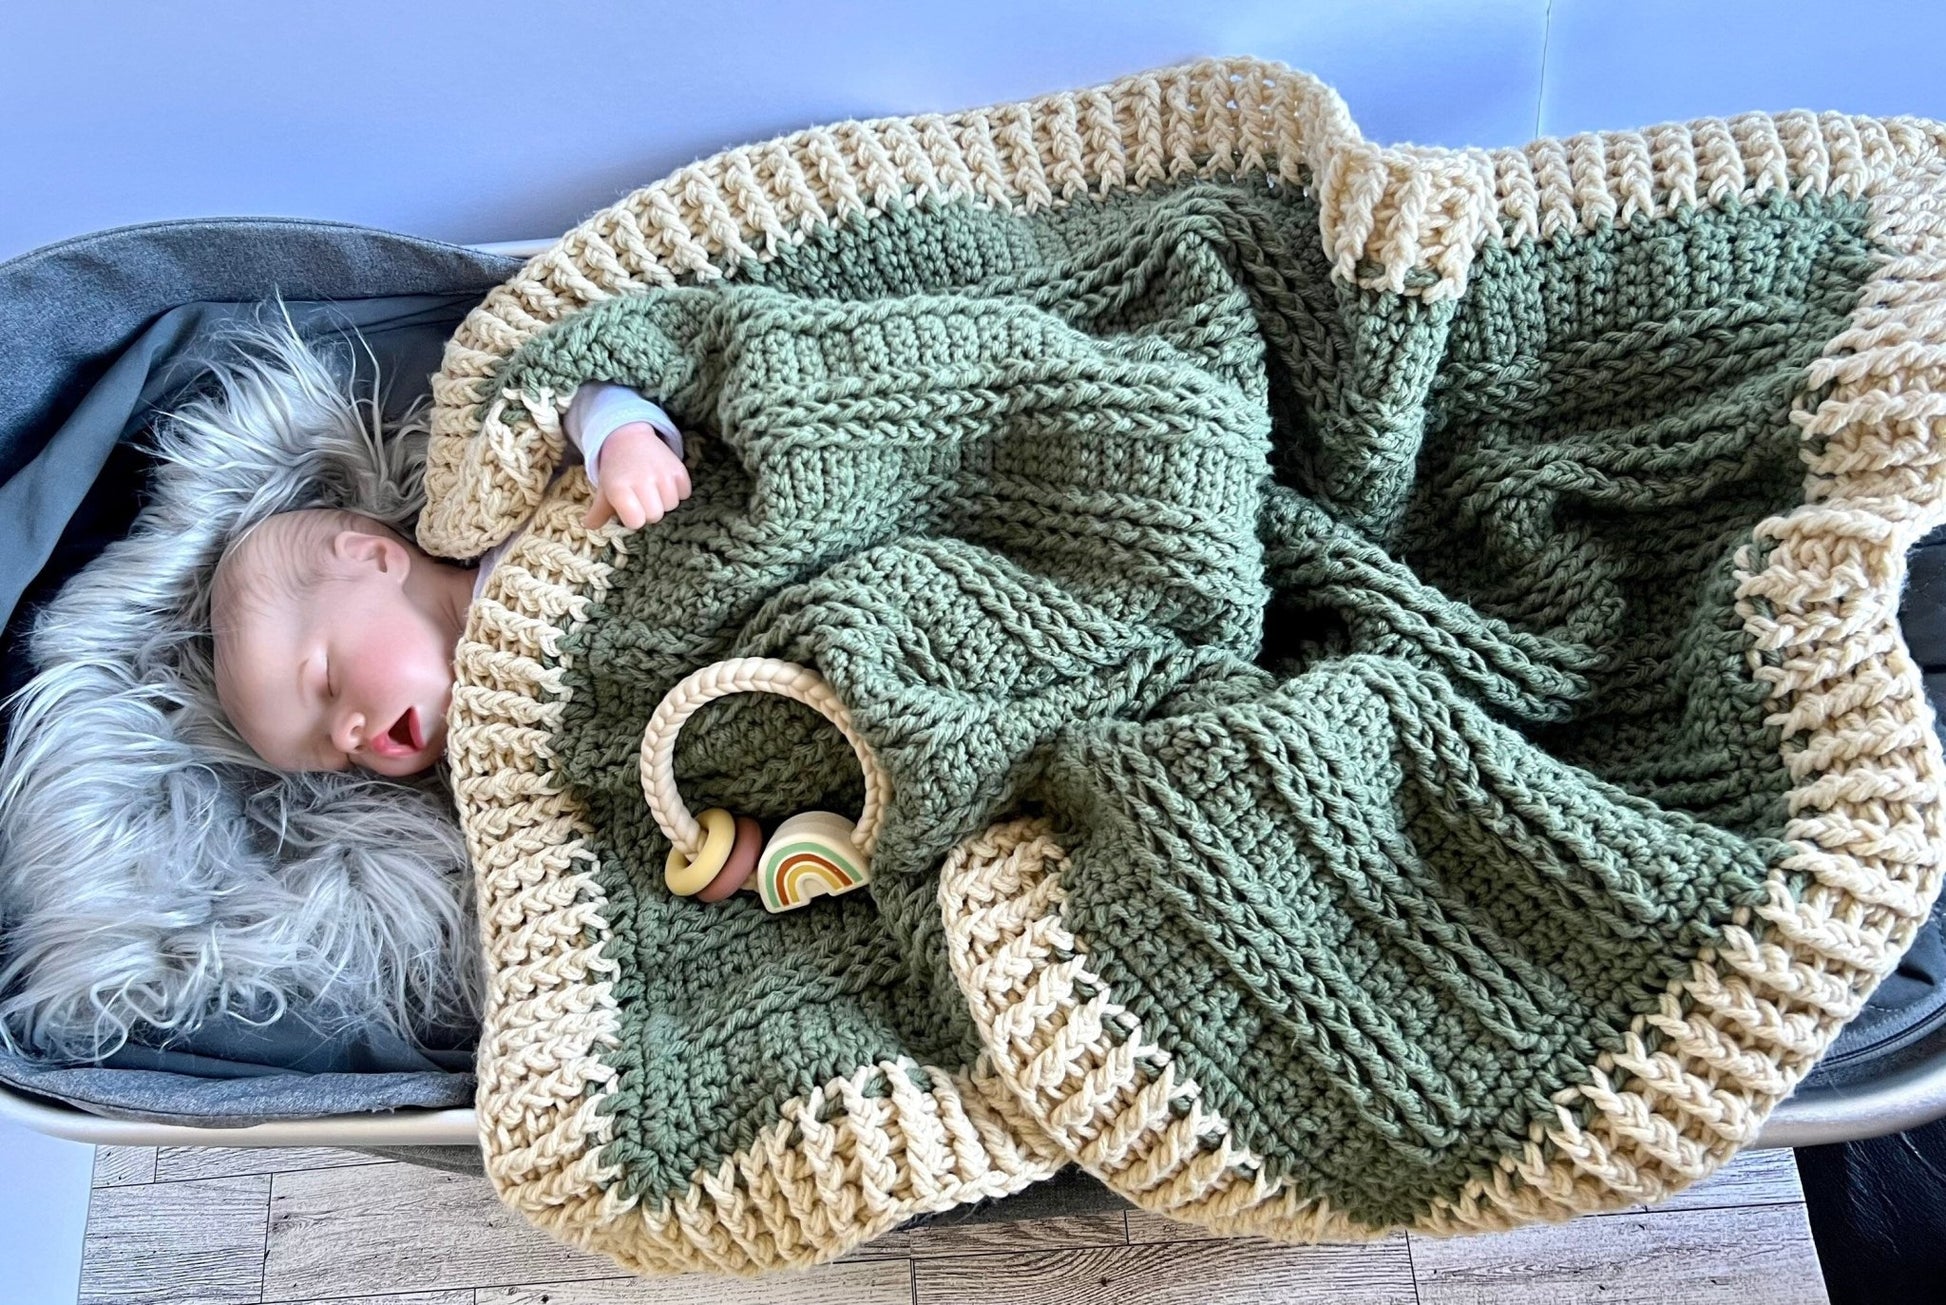 Green and beige baby blanket,modern heirloom blanket, blanket for baby boy- baby shower gift 31”x26”cradle blanket, boho room decor - Lilly Grace Sparkle Boutique